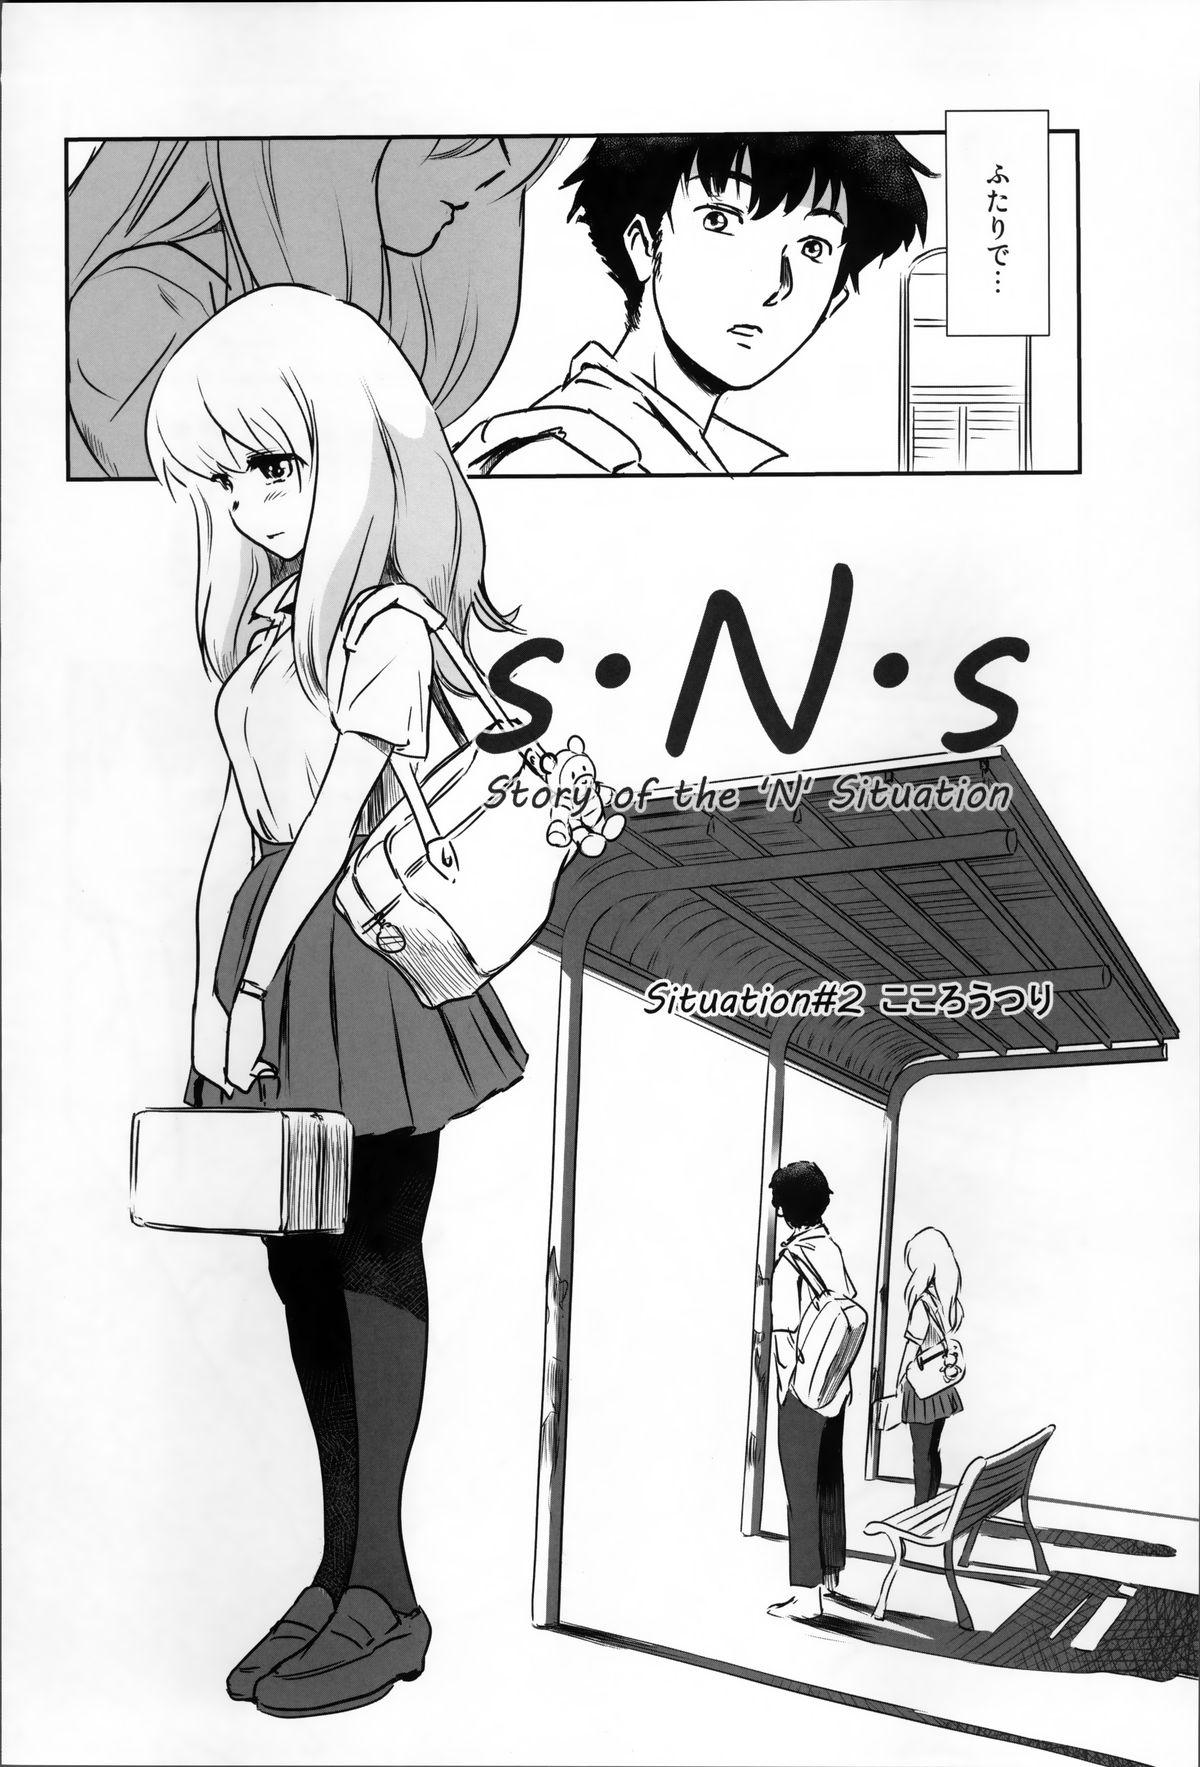 Wam Story of the 'N' Situation - Situation#2 Kokoro Utsuri Groping - Page 4